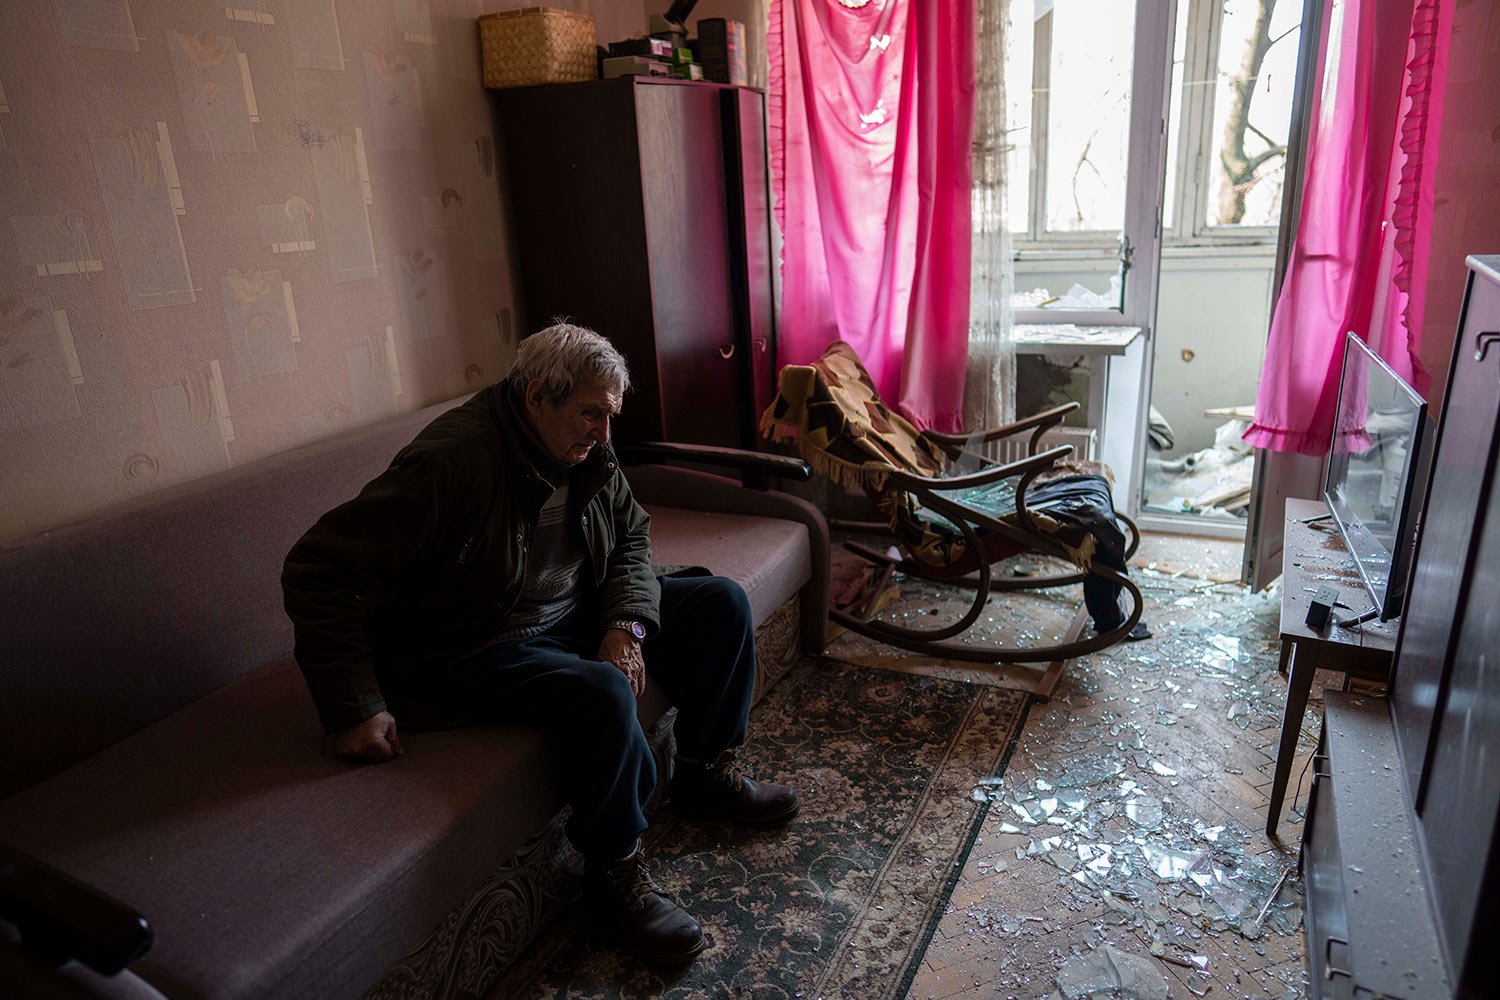  Volodymyr, 80, rests inside his apartment damaged by shelling, in Kyiv, Ukraine,Wednesday, March 23, 2022. (AP Photo/Rodrigo Abd) 